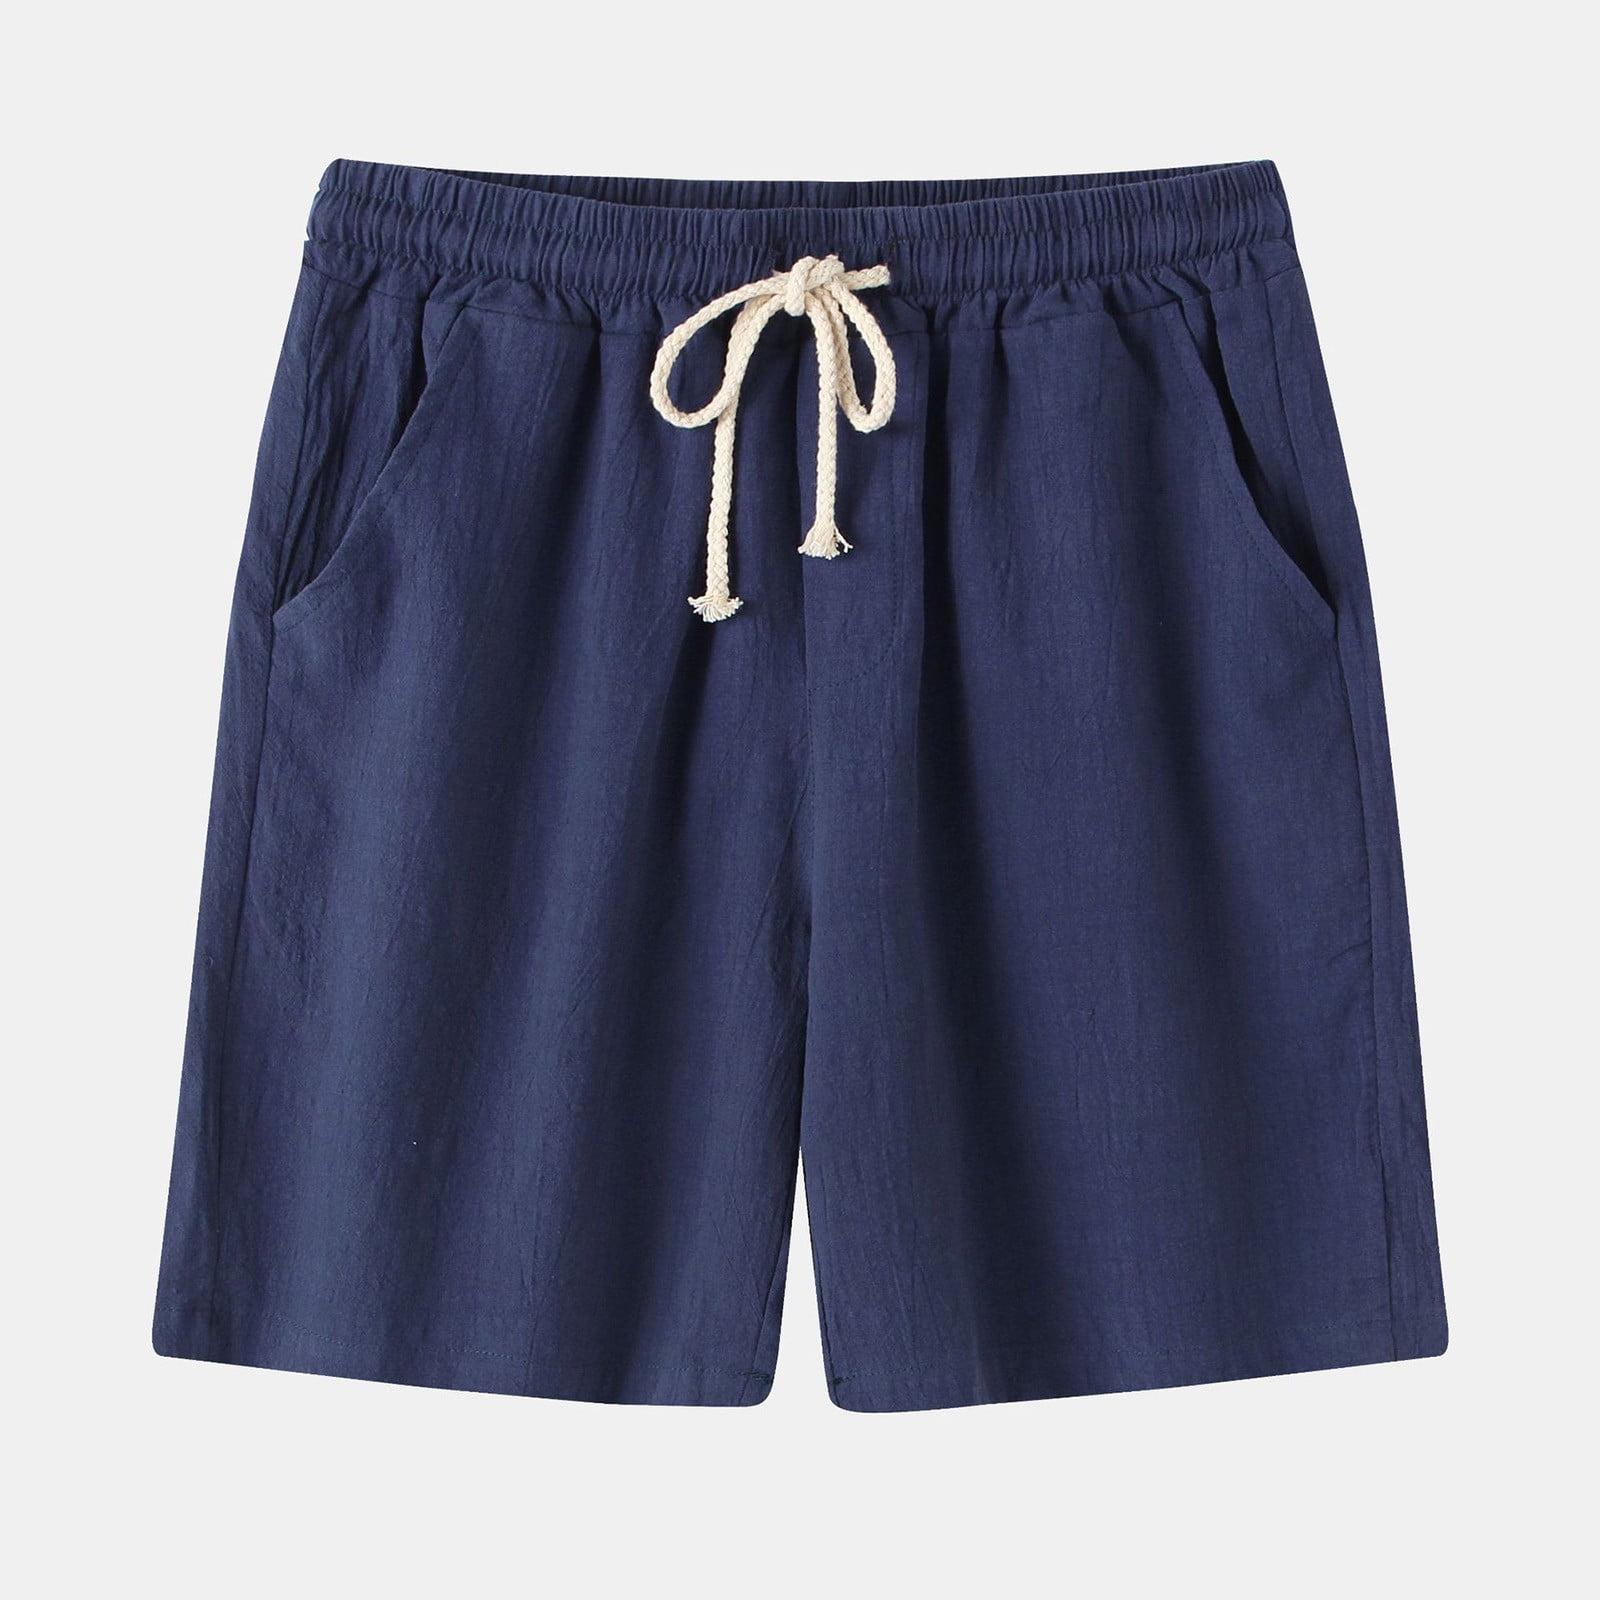 Men's Shorts, Jersey, Cotton & Summer Shorts